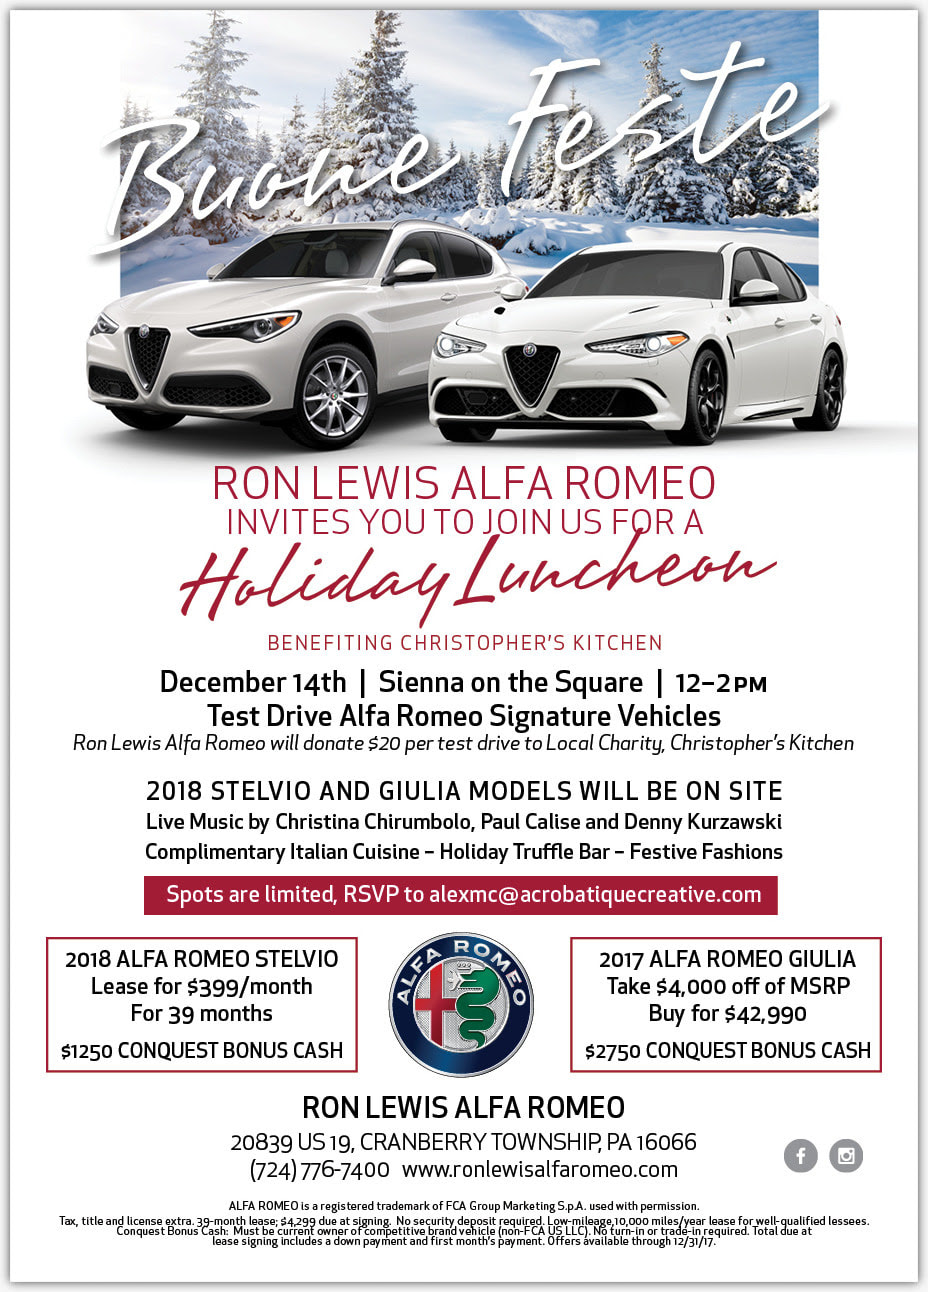 Ron Lewis Alfa Romeo Holiday Luncheon